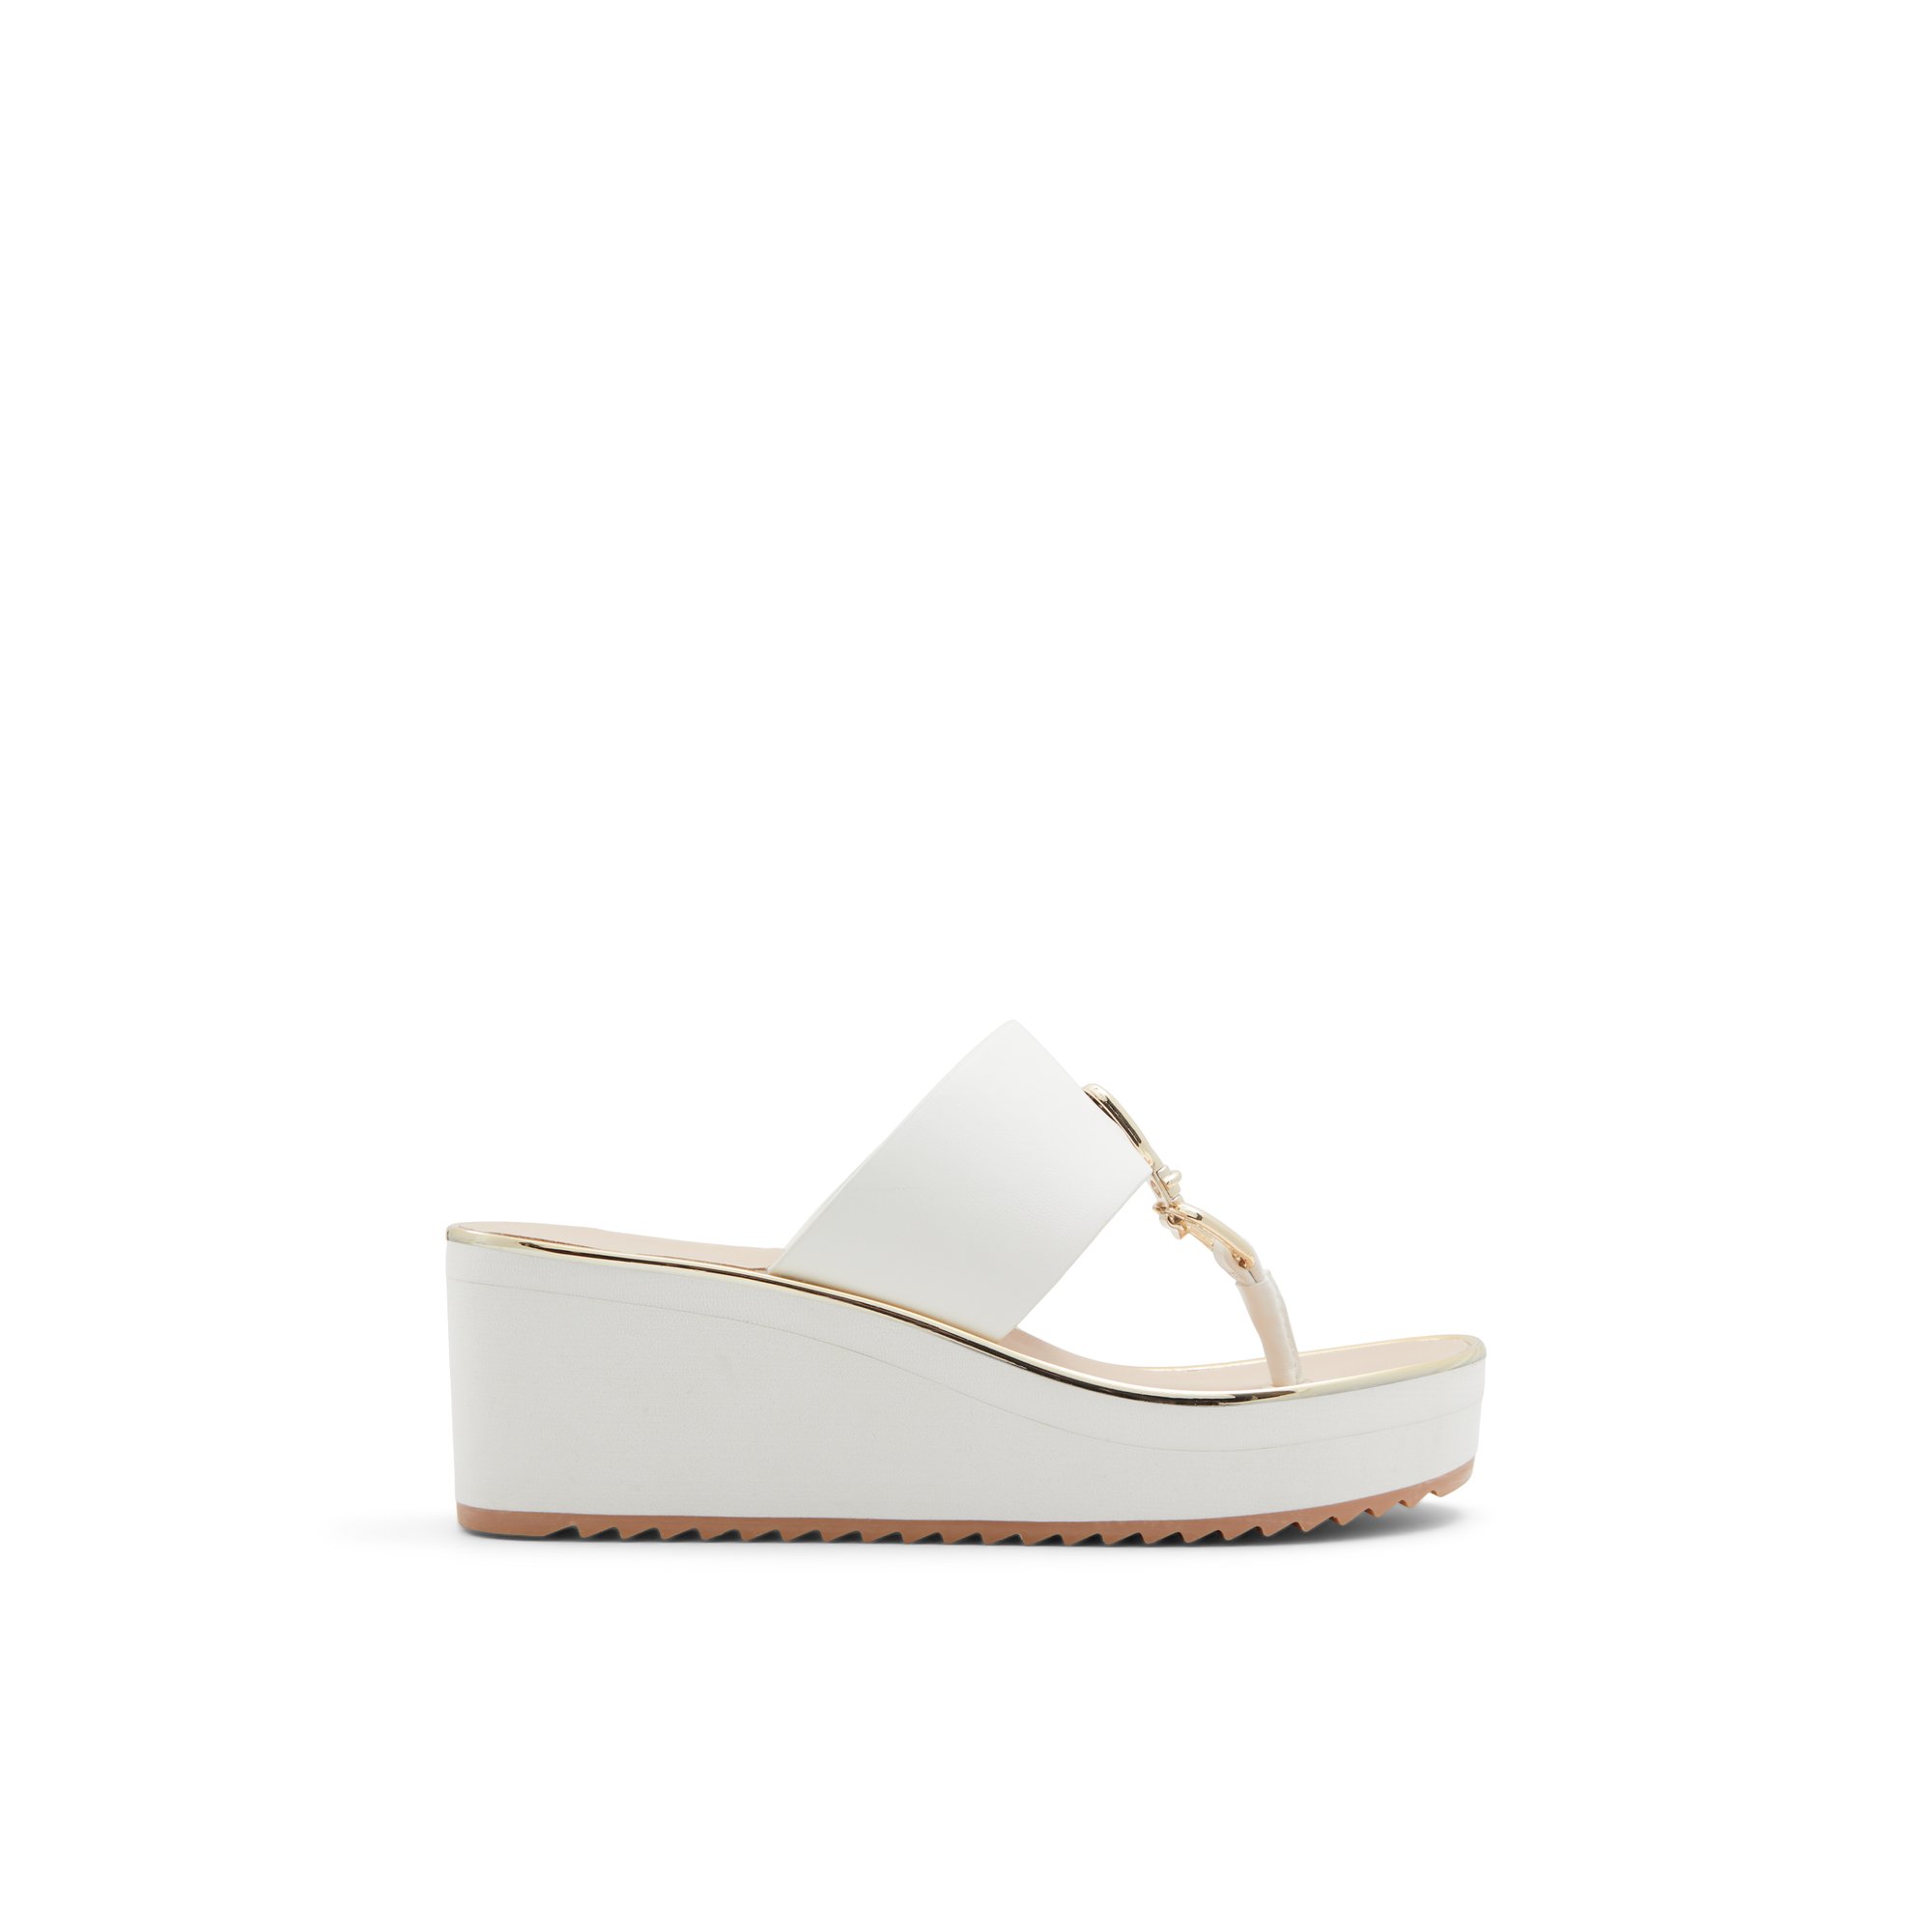 ALDO Maesllan - Women's Sandals Wedges - White